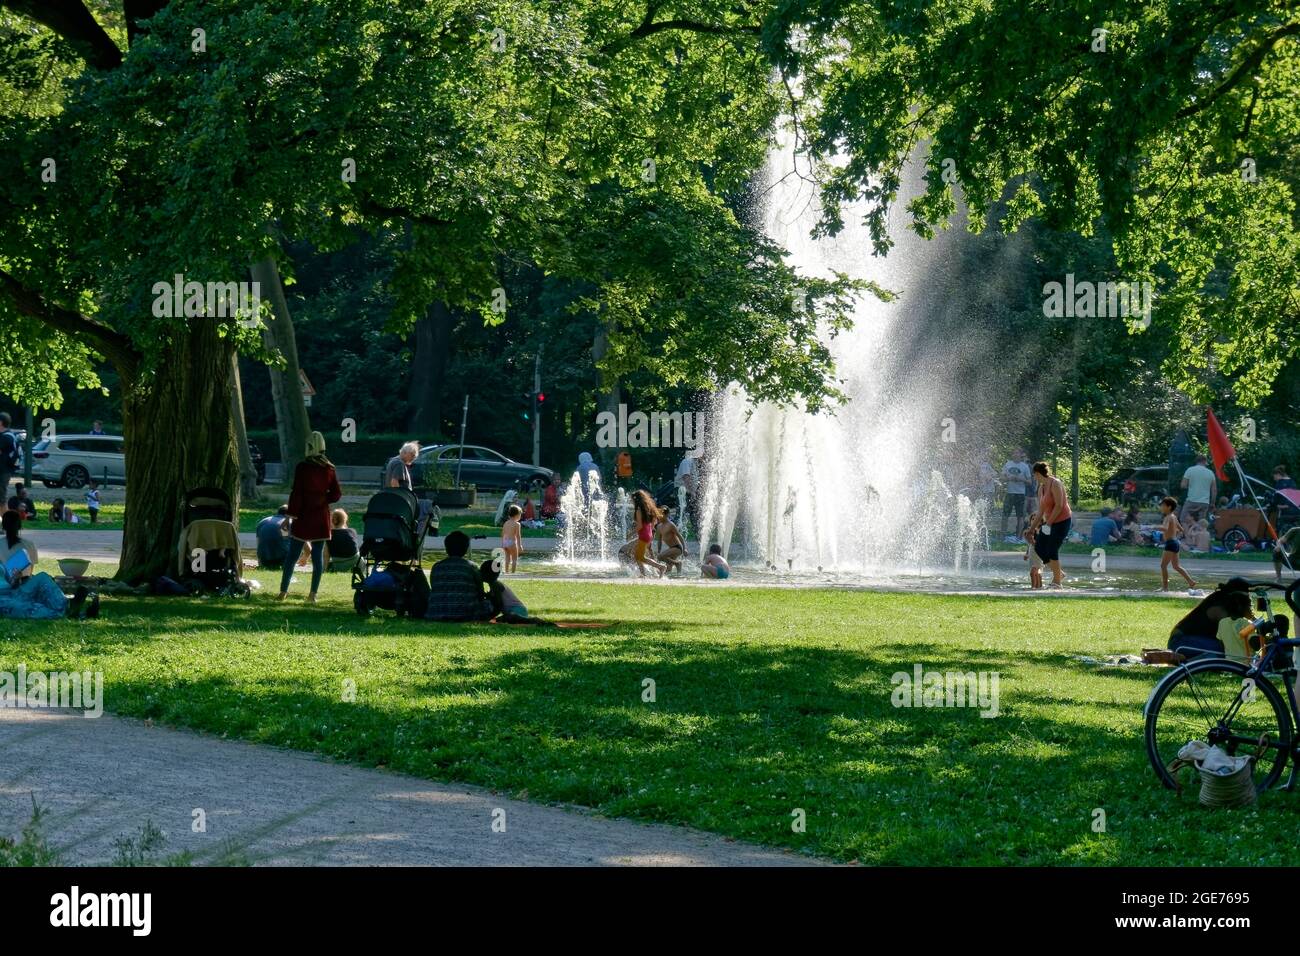 Sommer a Berlino , Familien am Springbrunnen im Treptower Park bei schönem Wetter , Berlin-Treptow Foto Stock